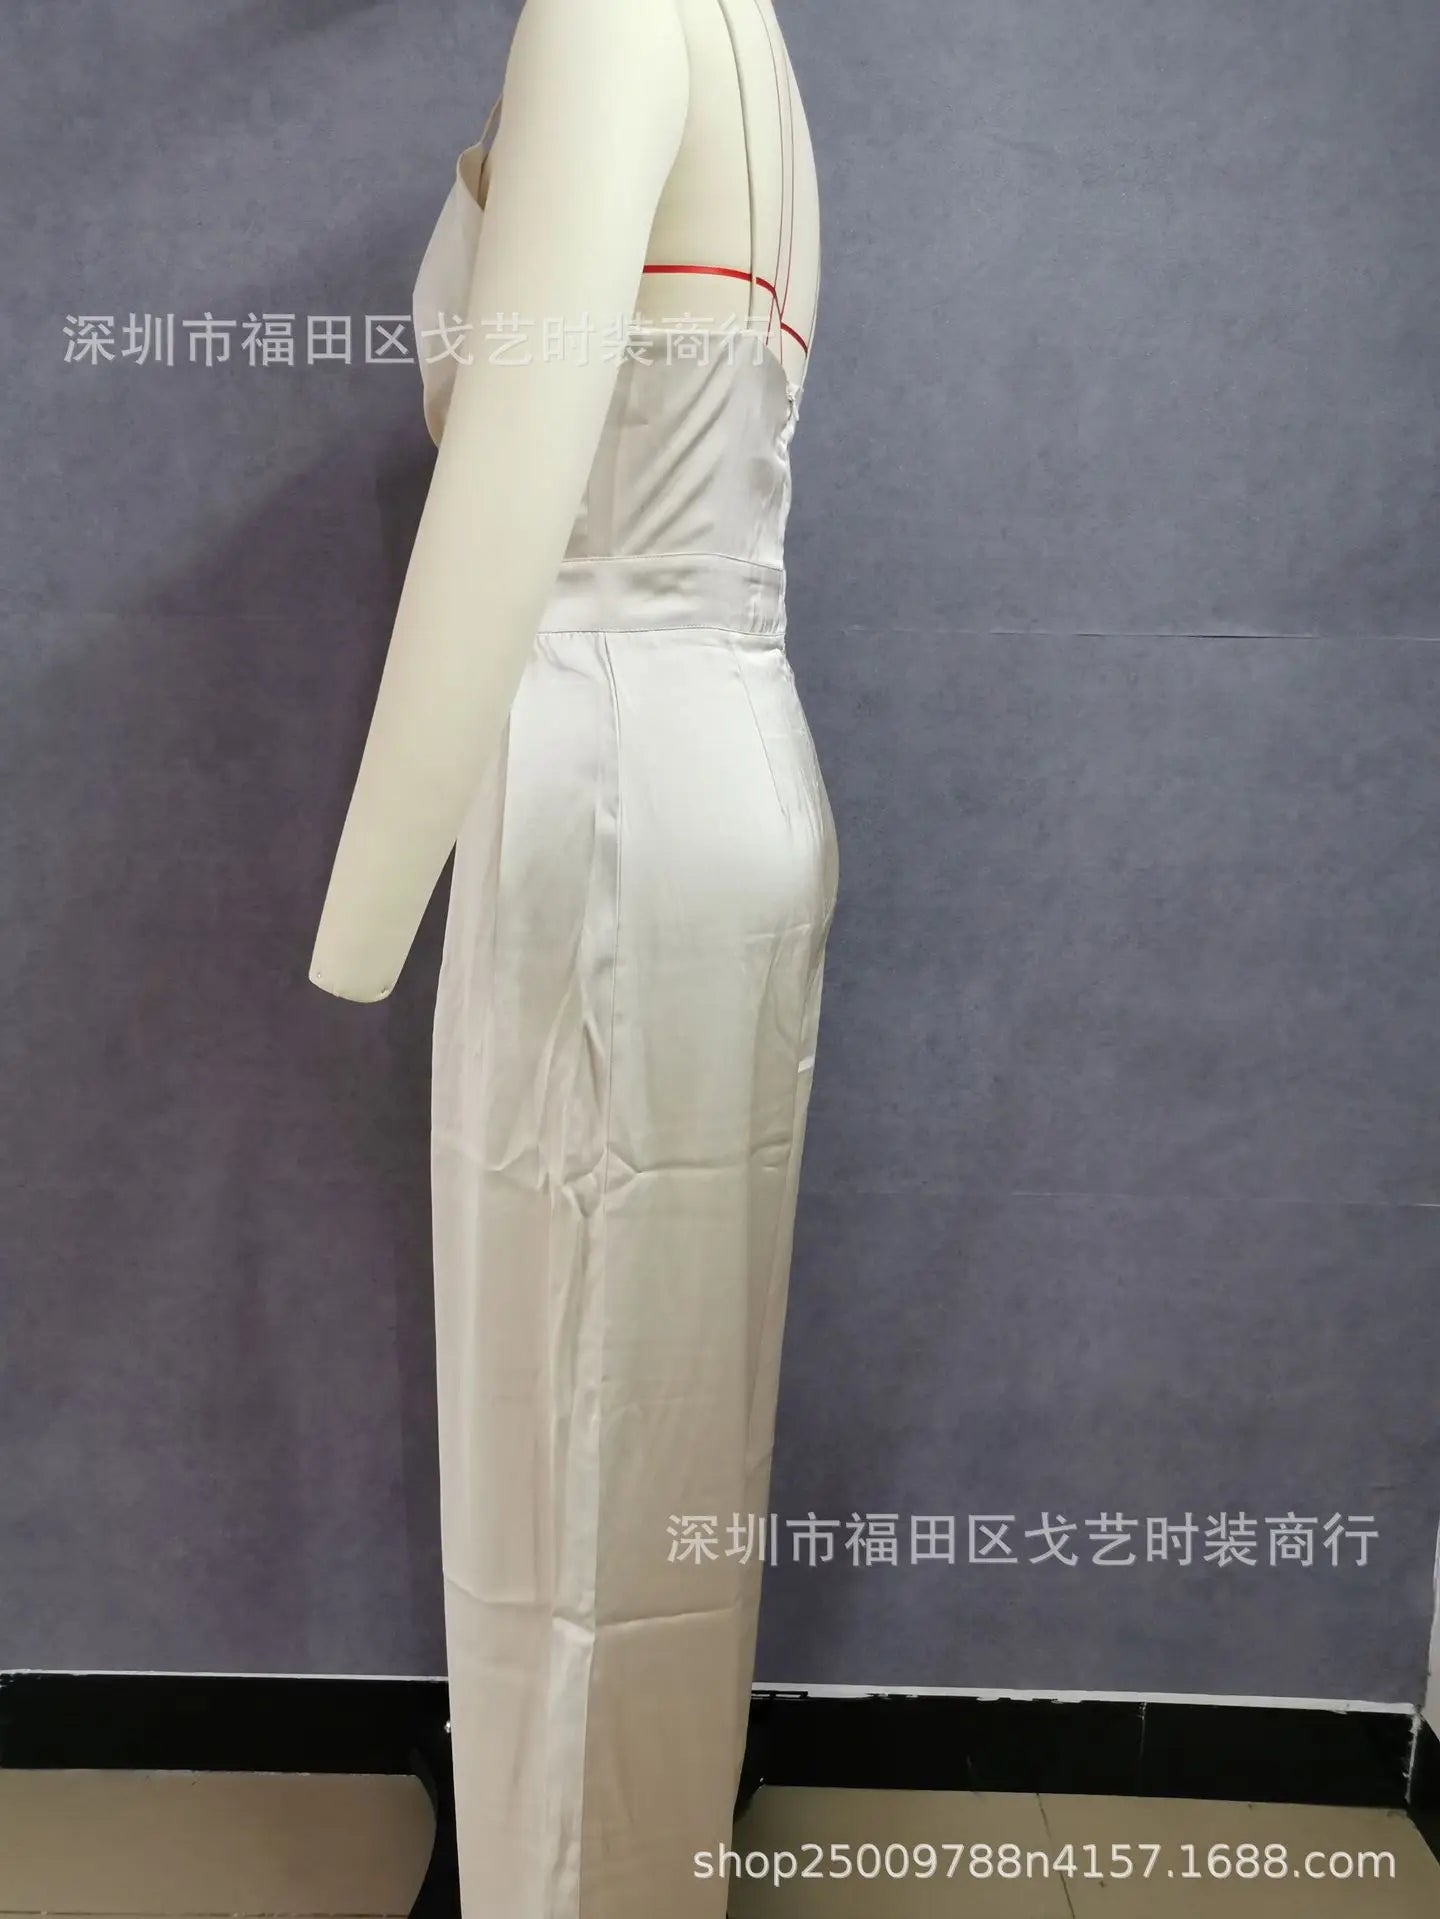 Elegant chic women's sleeveless jumpsuit